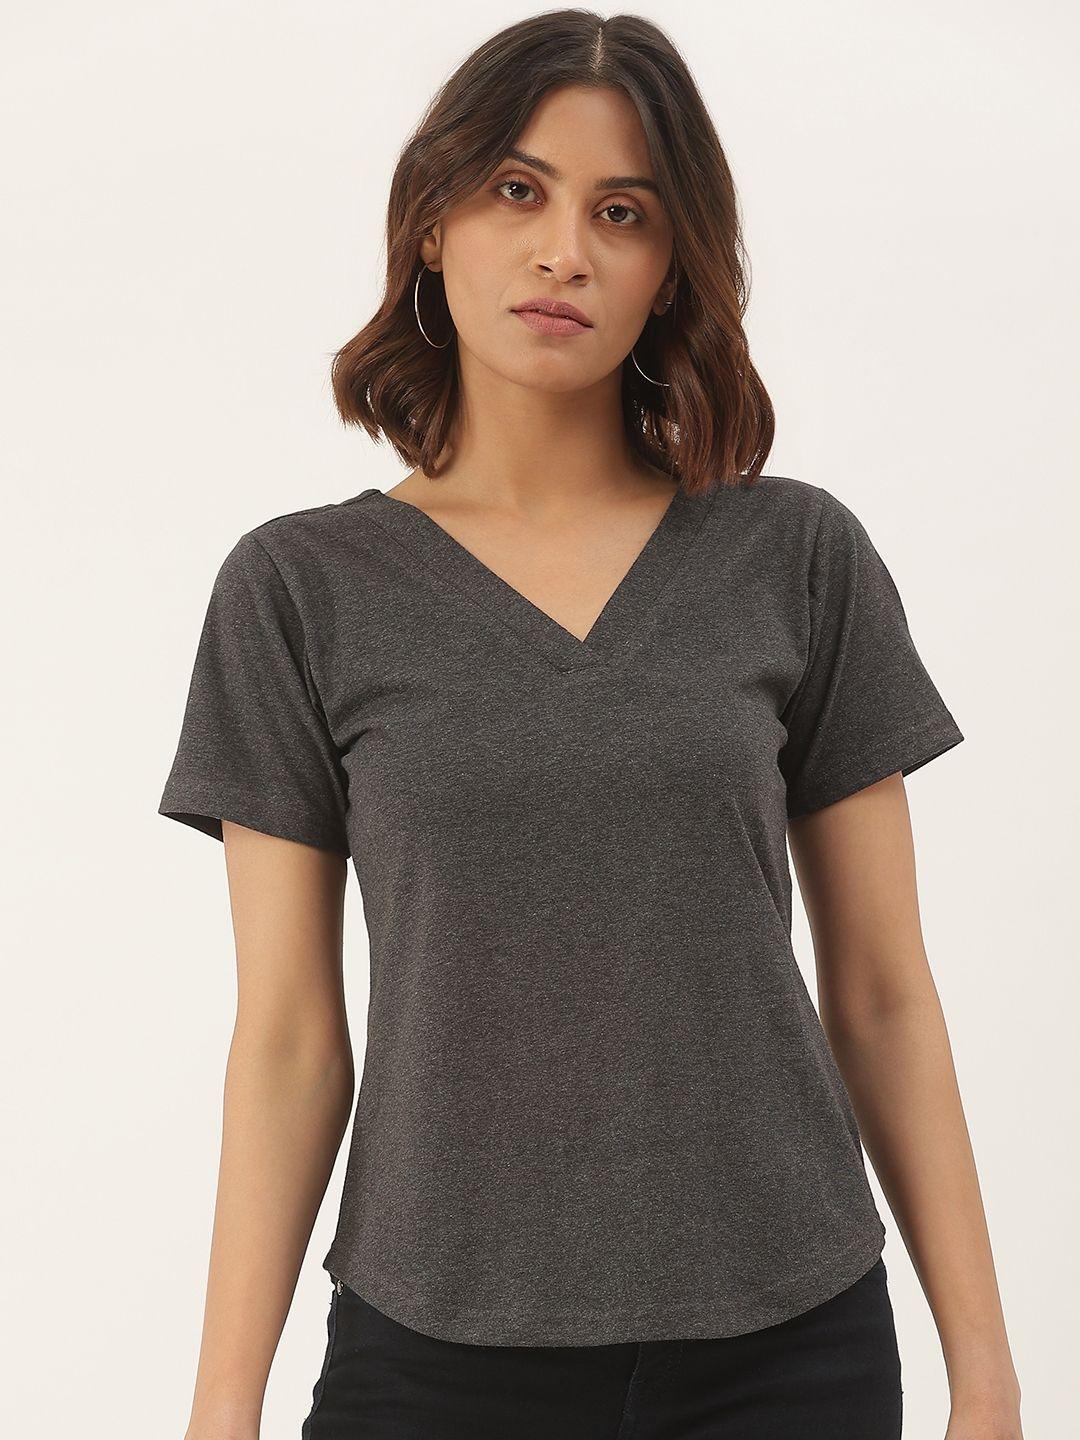 brinns women charcoal grey v-neck cotton t-shirt